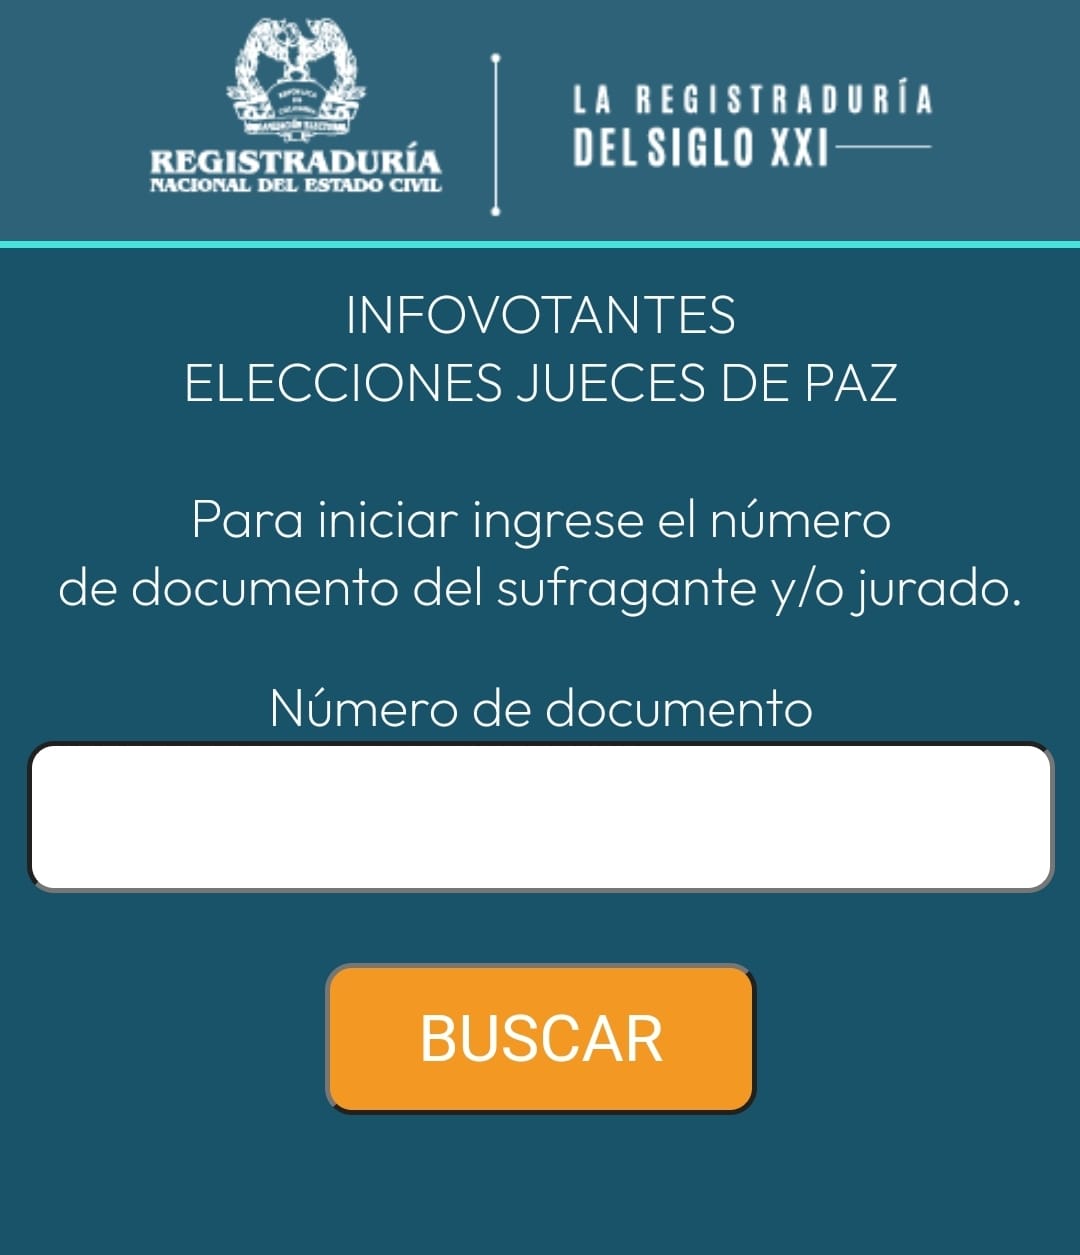  Infovotantes - PIEZA: Registraduría Nacional